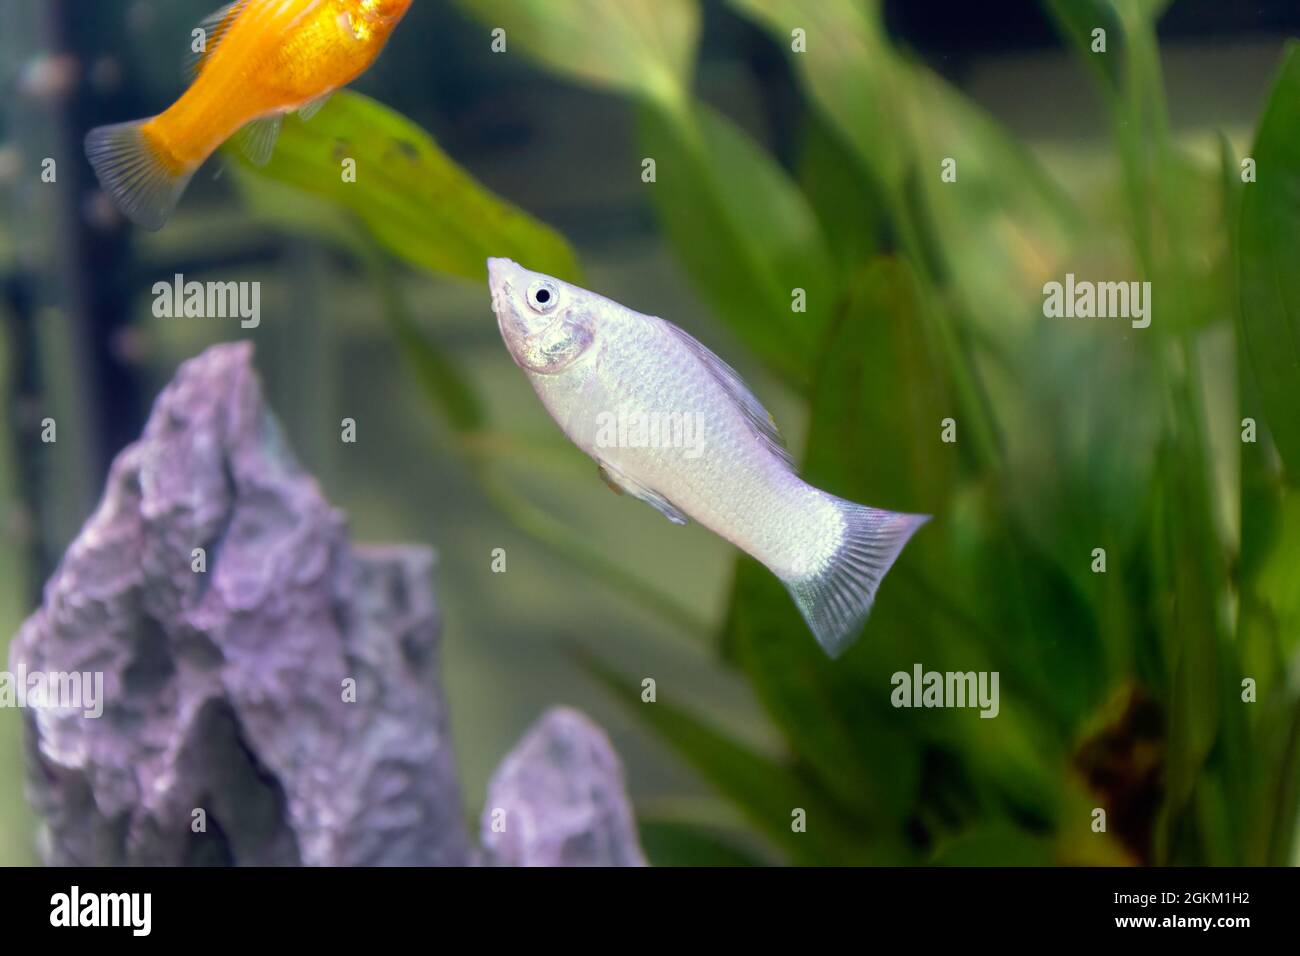 A small silver or white common Molly fish in a home aquarium Stock Photo